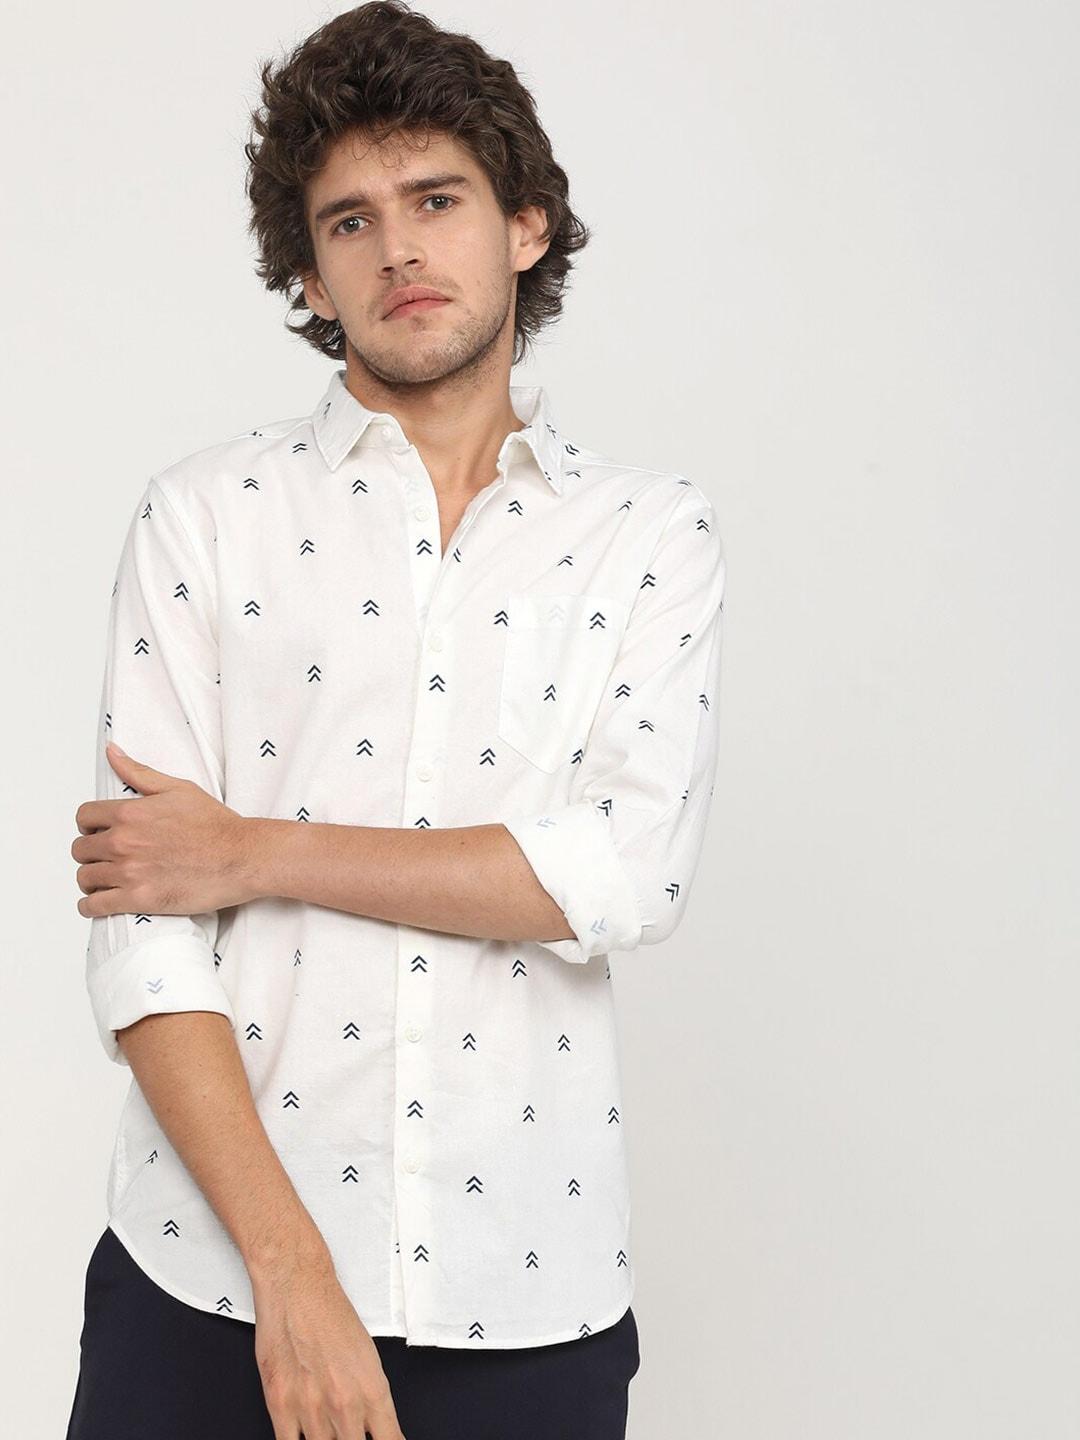 ketch-men-white-slim-fit-opaque-printed-casual-shirt